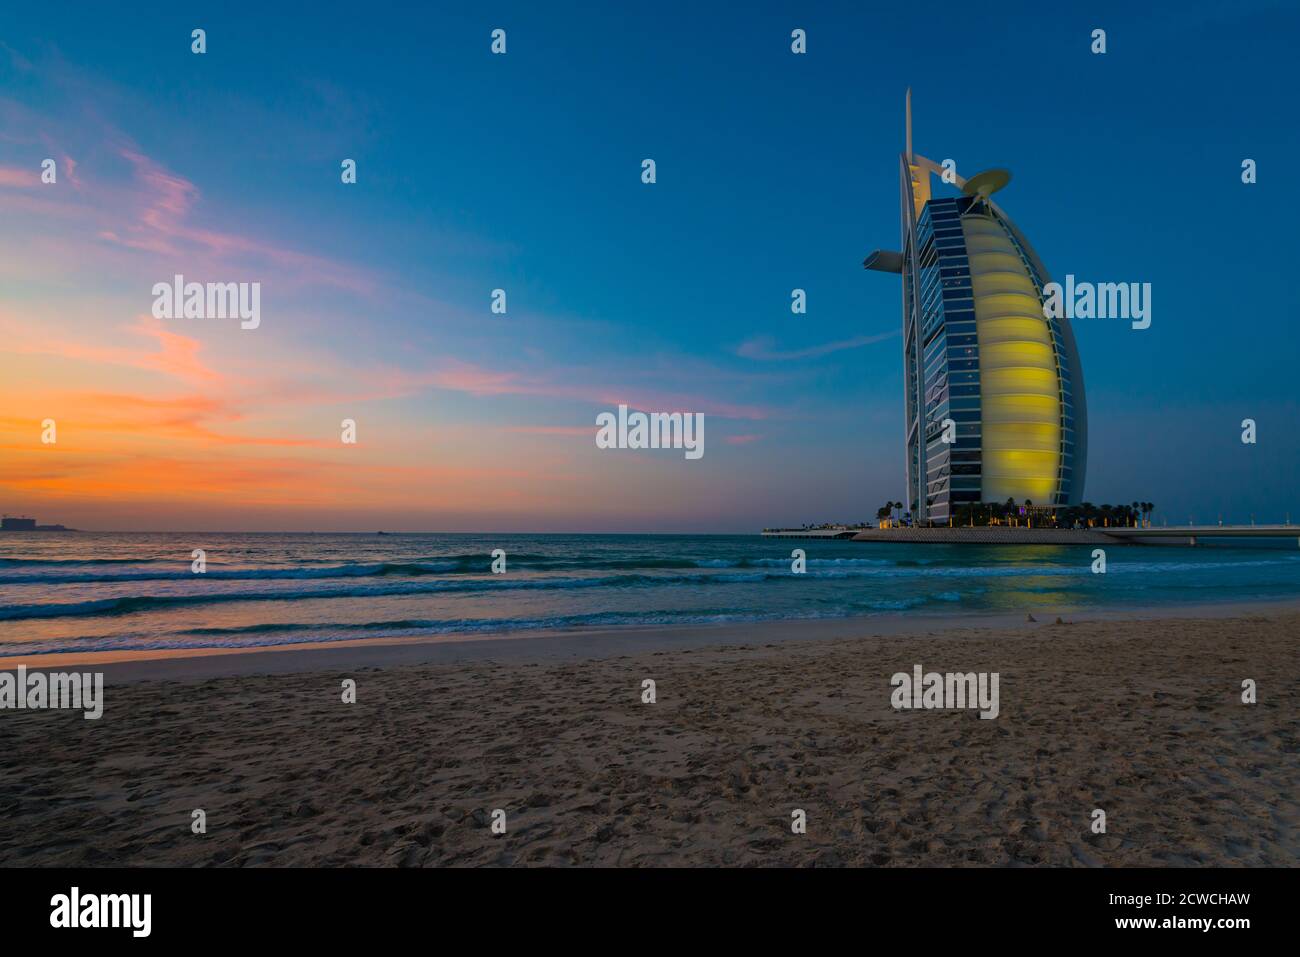 View of Burj Al Arab Jumeirah, a luxury hotel situated on its own island from Jumeirah Beach, Dubai, United Arab Emirates Stock Photo